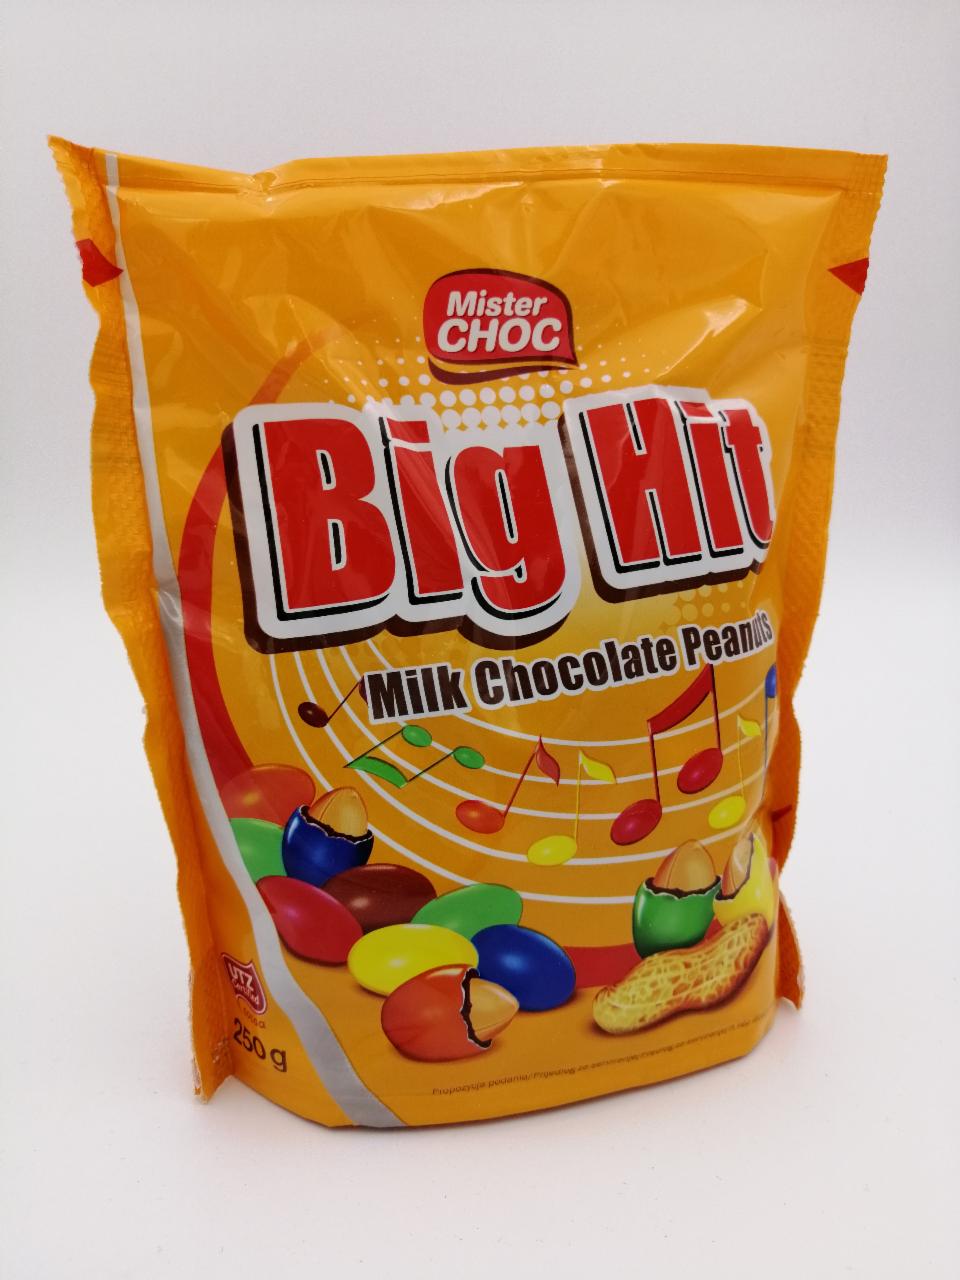 Képek - Mister choc big hit milk chocolate peanuts 